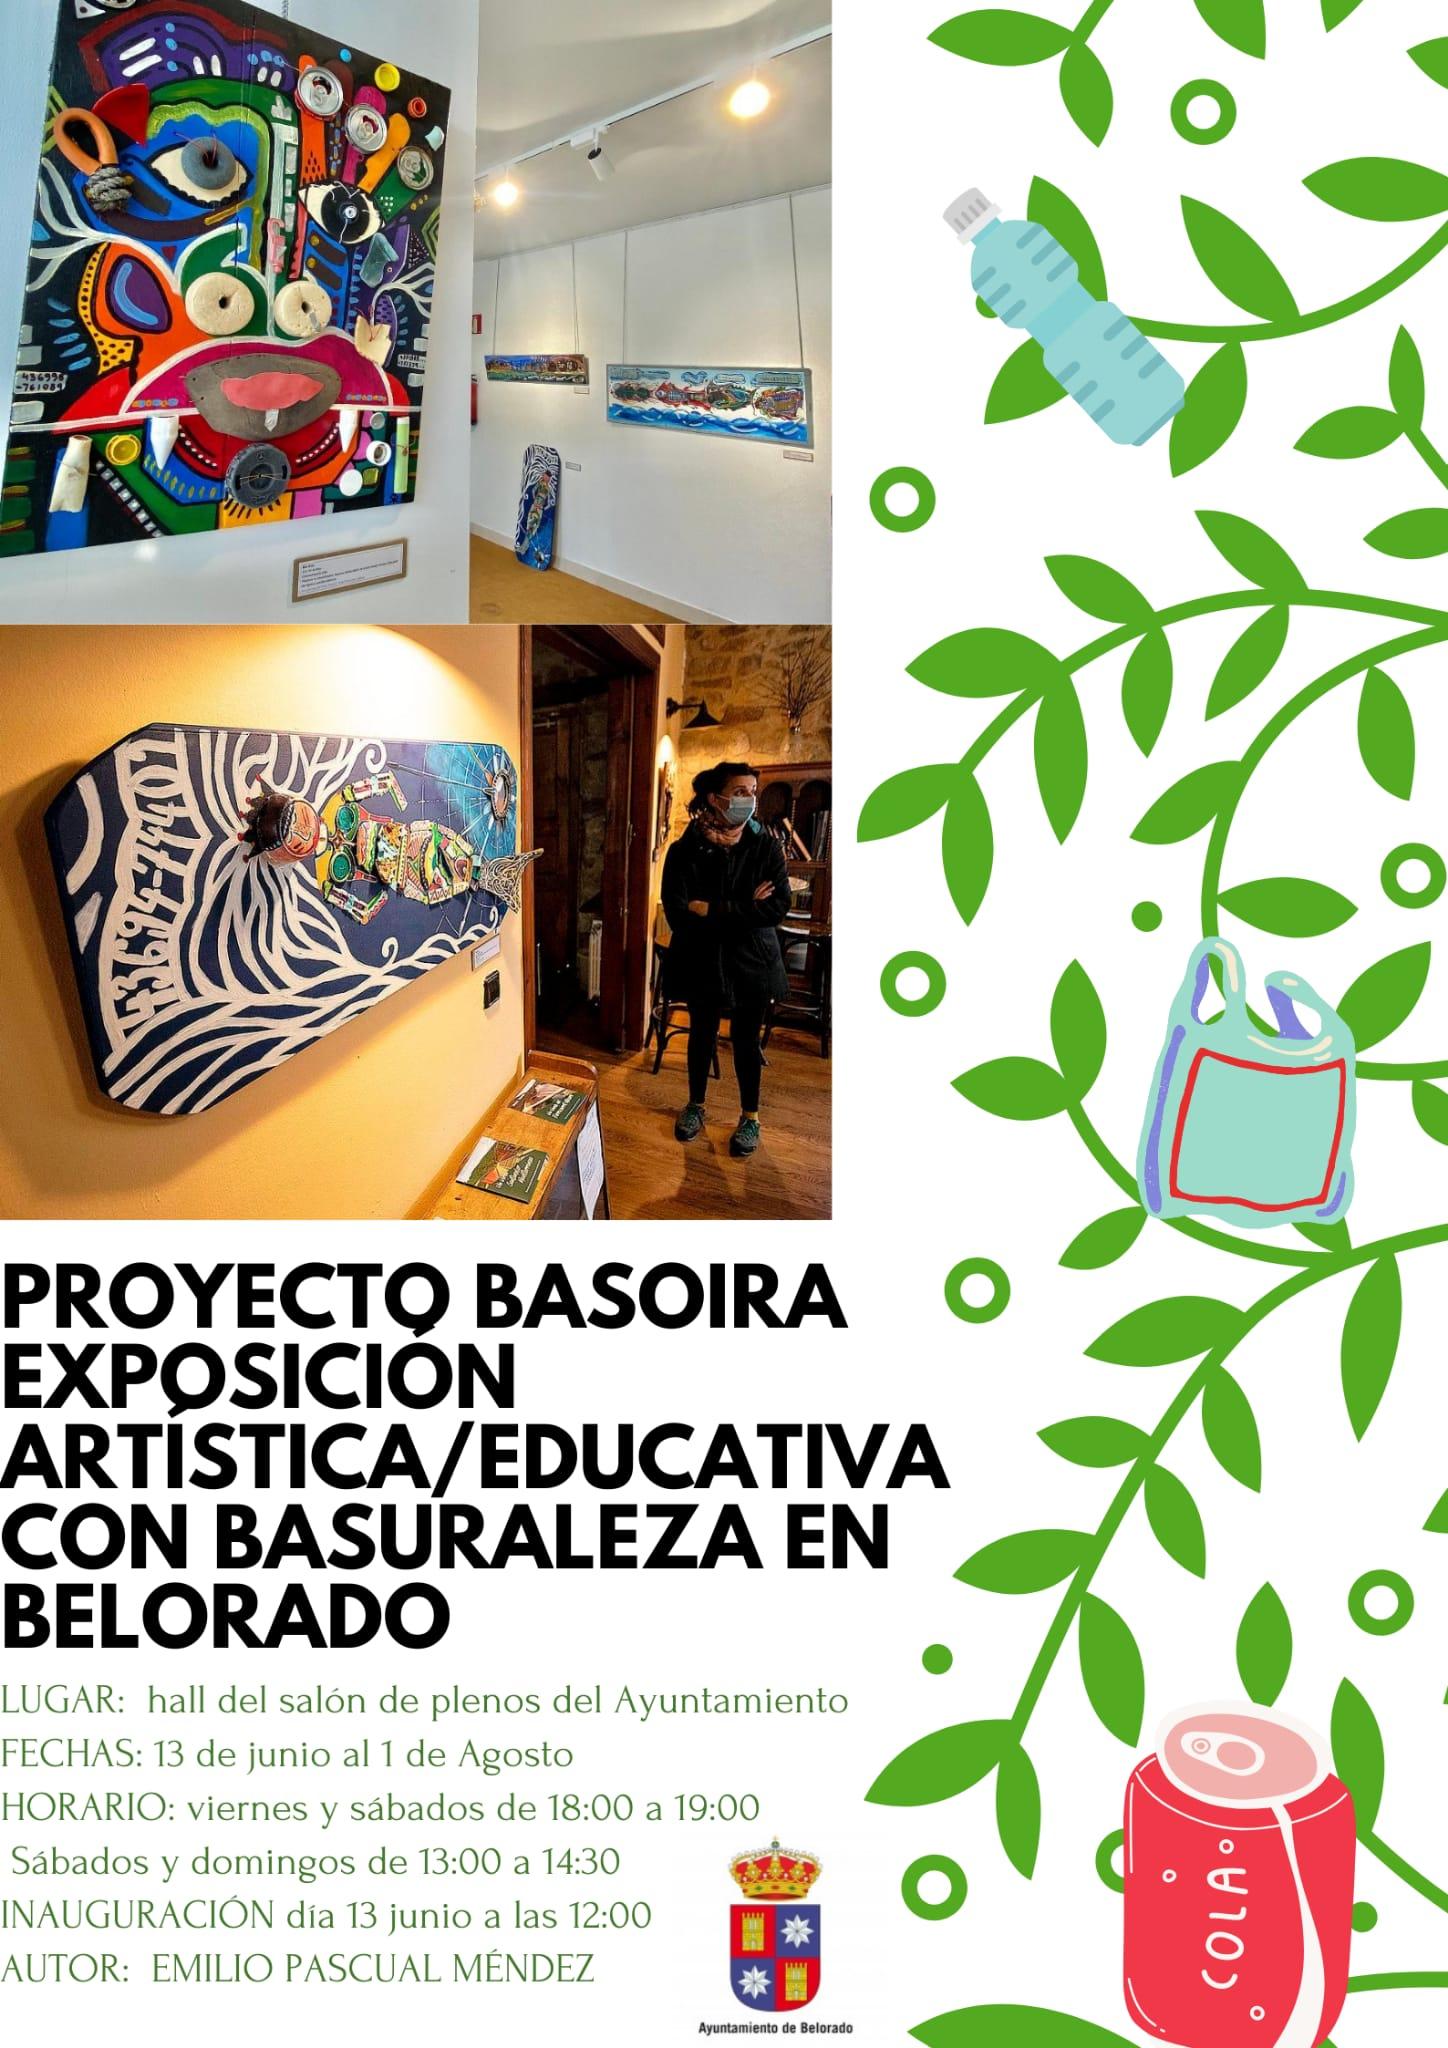 Exposición artística / educativa con basuraleza en Belorado